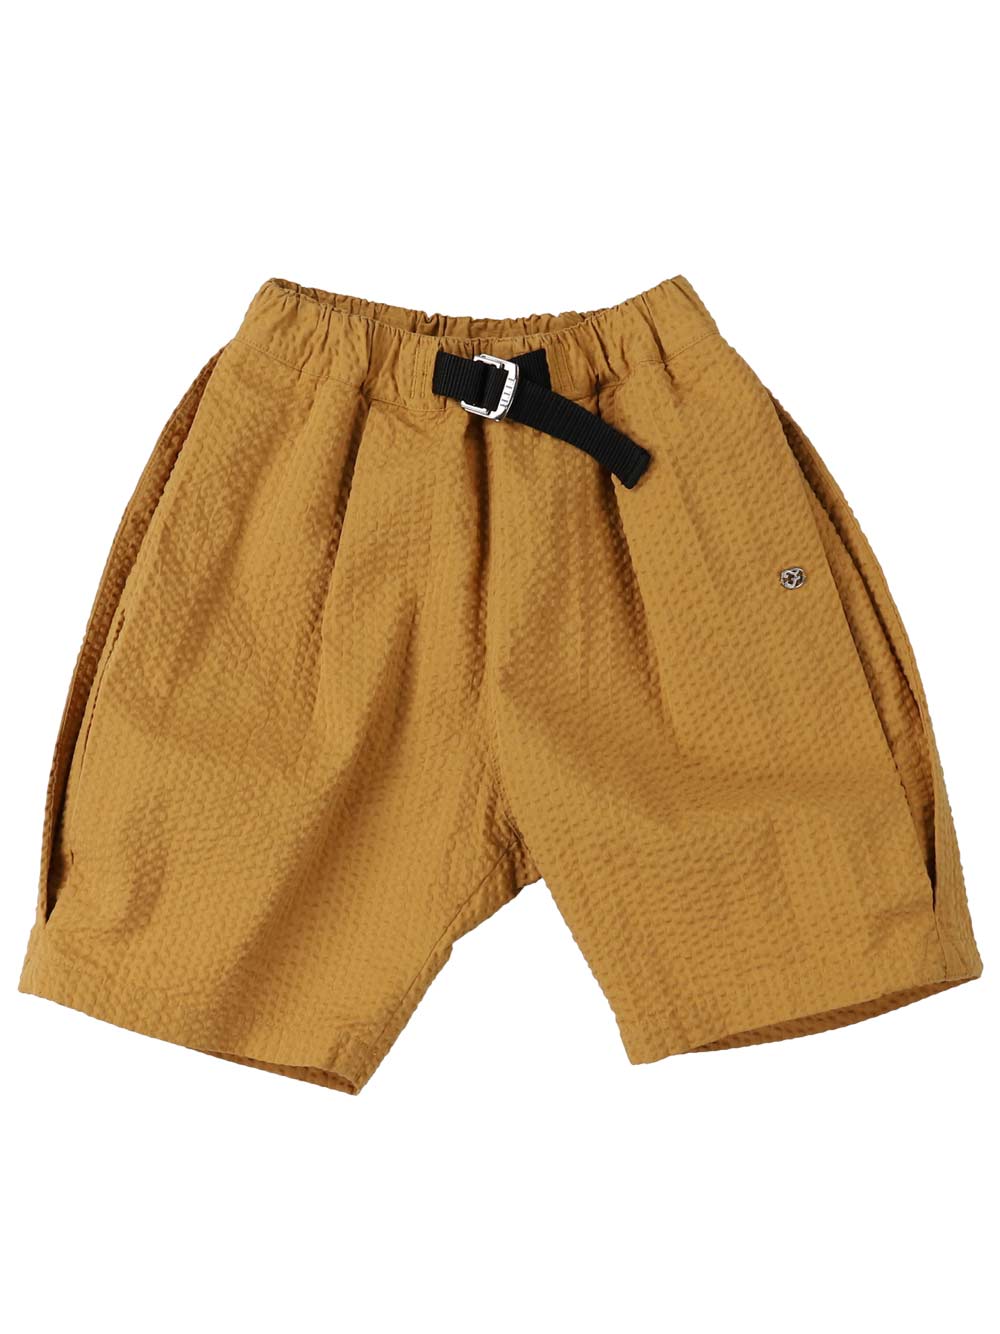 PREORDER: Brown Coolmax Shorts